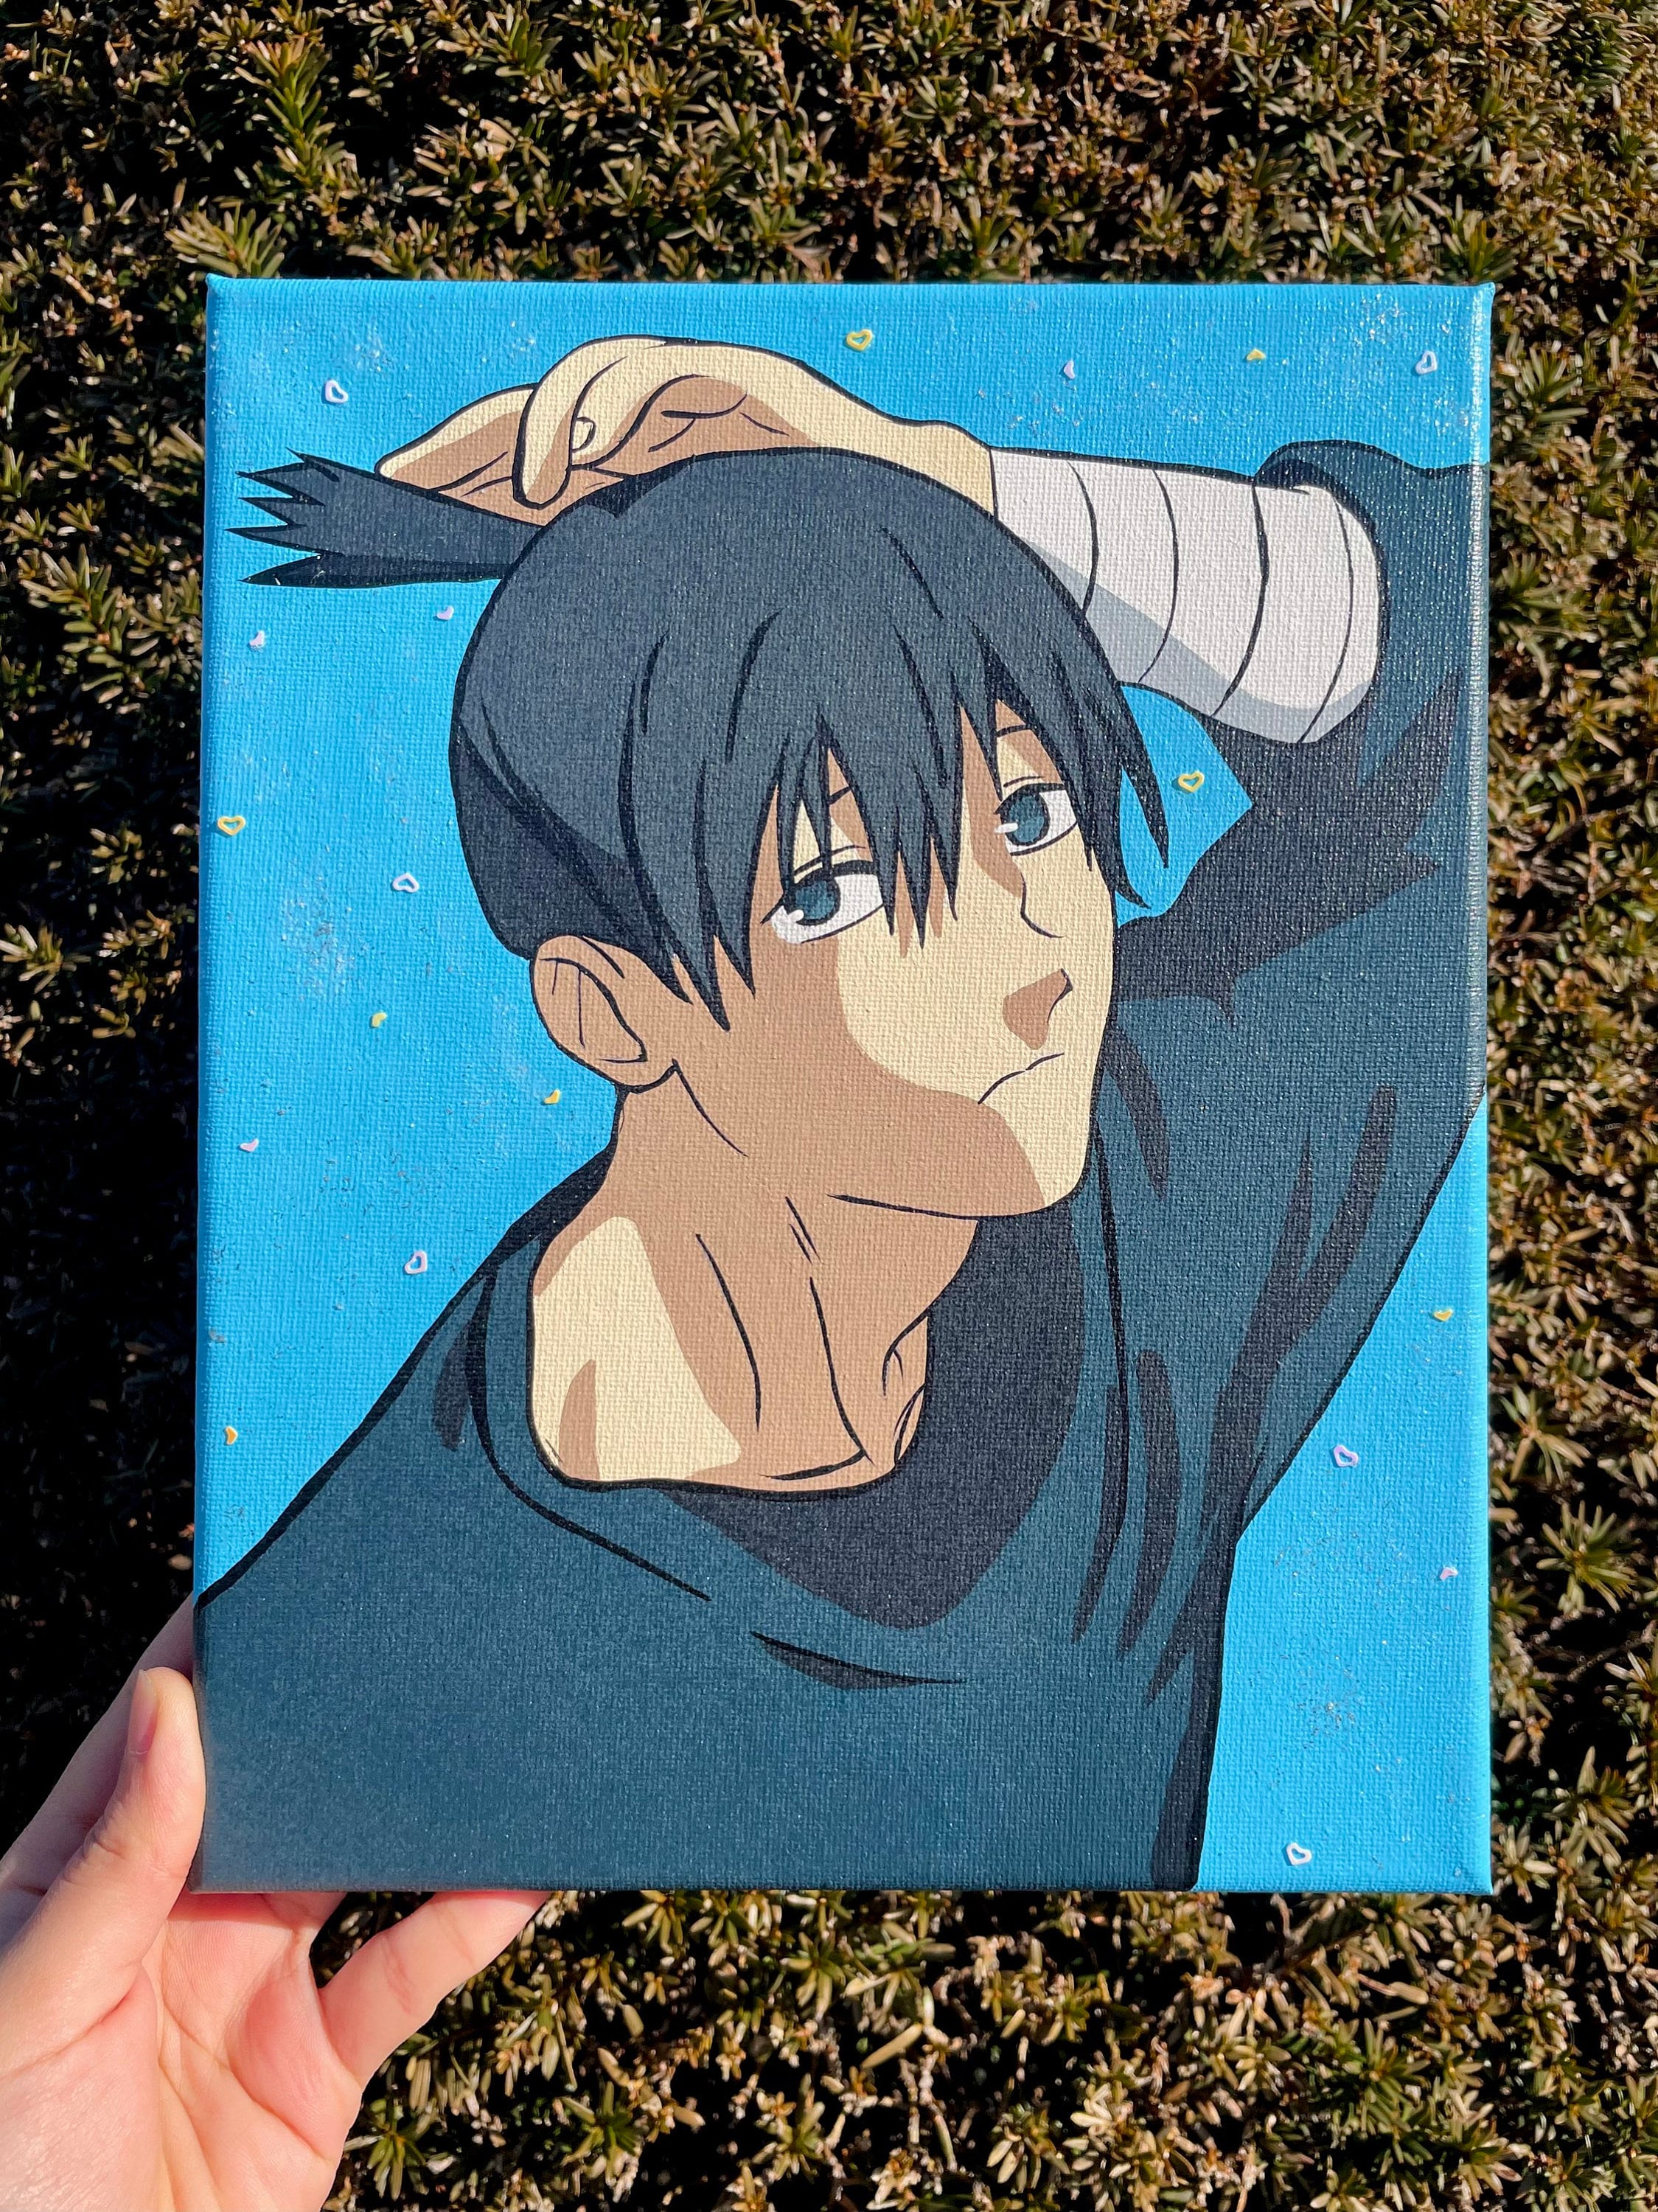 Aesthetic Anime Boy Manga Volleyball Acrylic Canvas Painting 8 